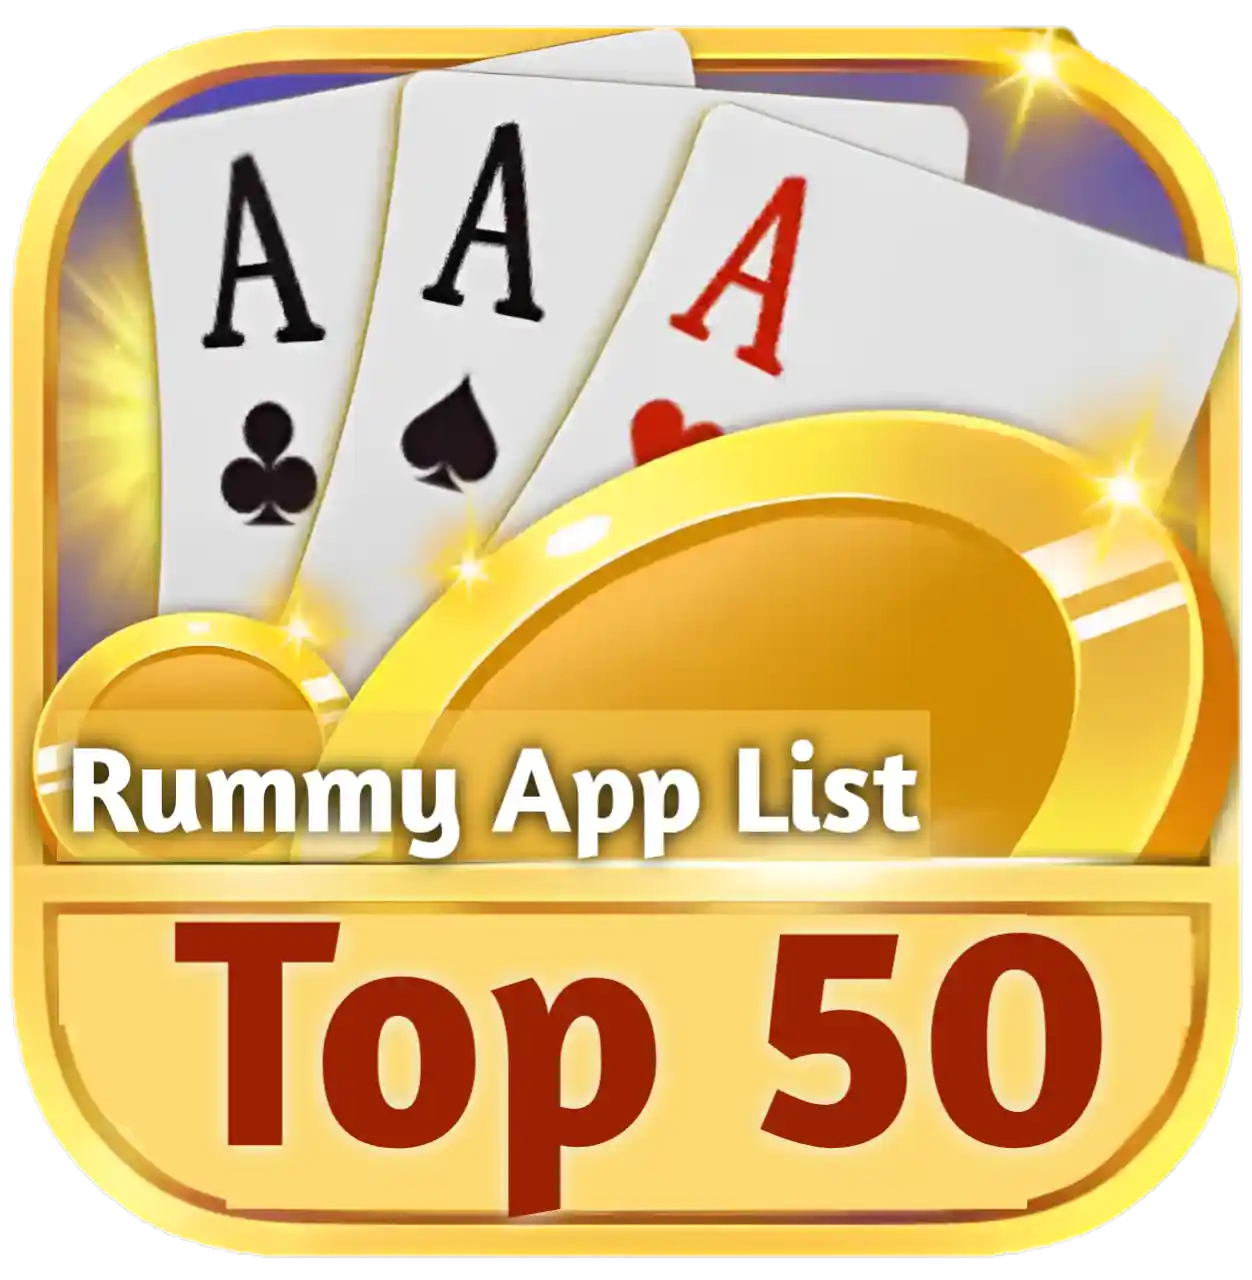 Top 50 Rummy App List - Top 20 Teen Patti App List 51 Bonus - India Rummy App